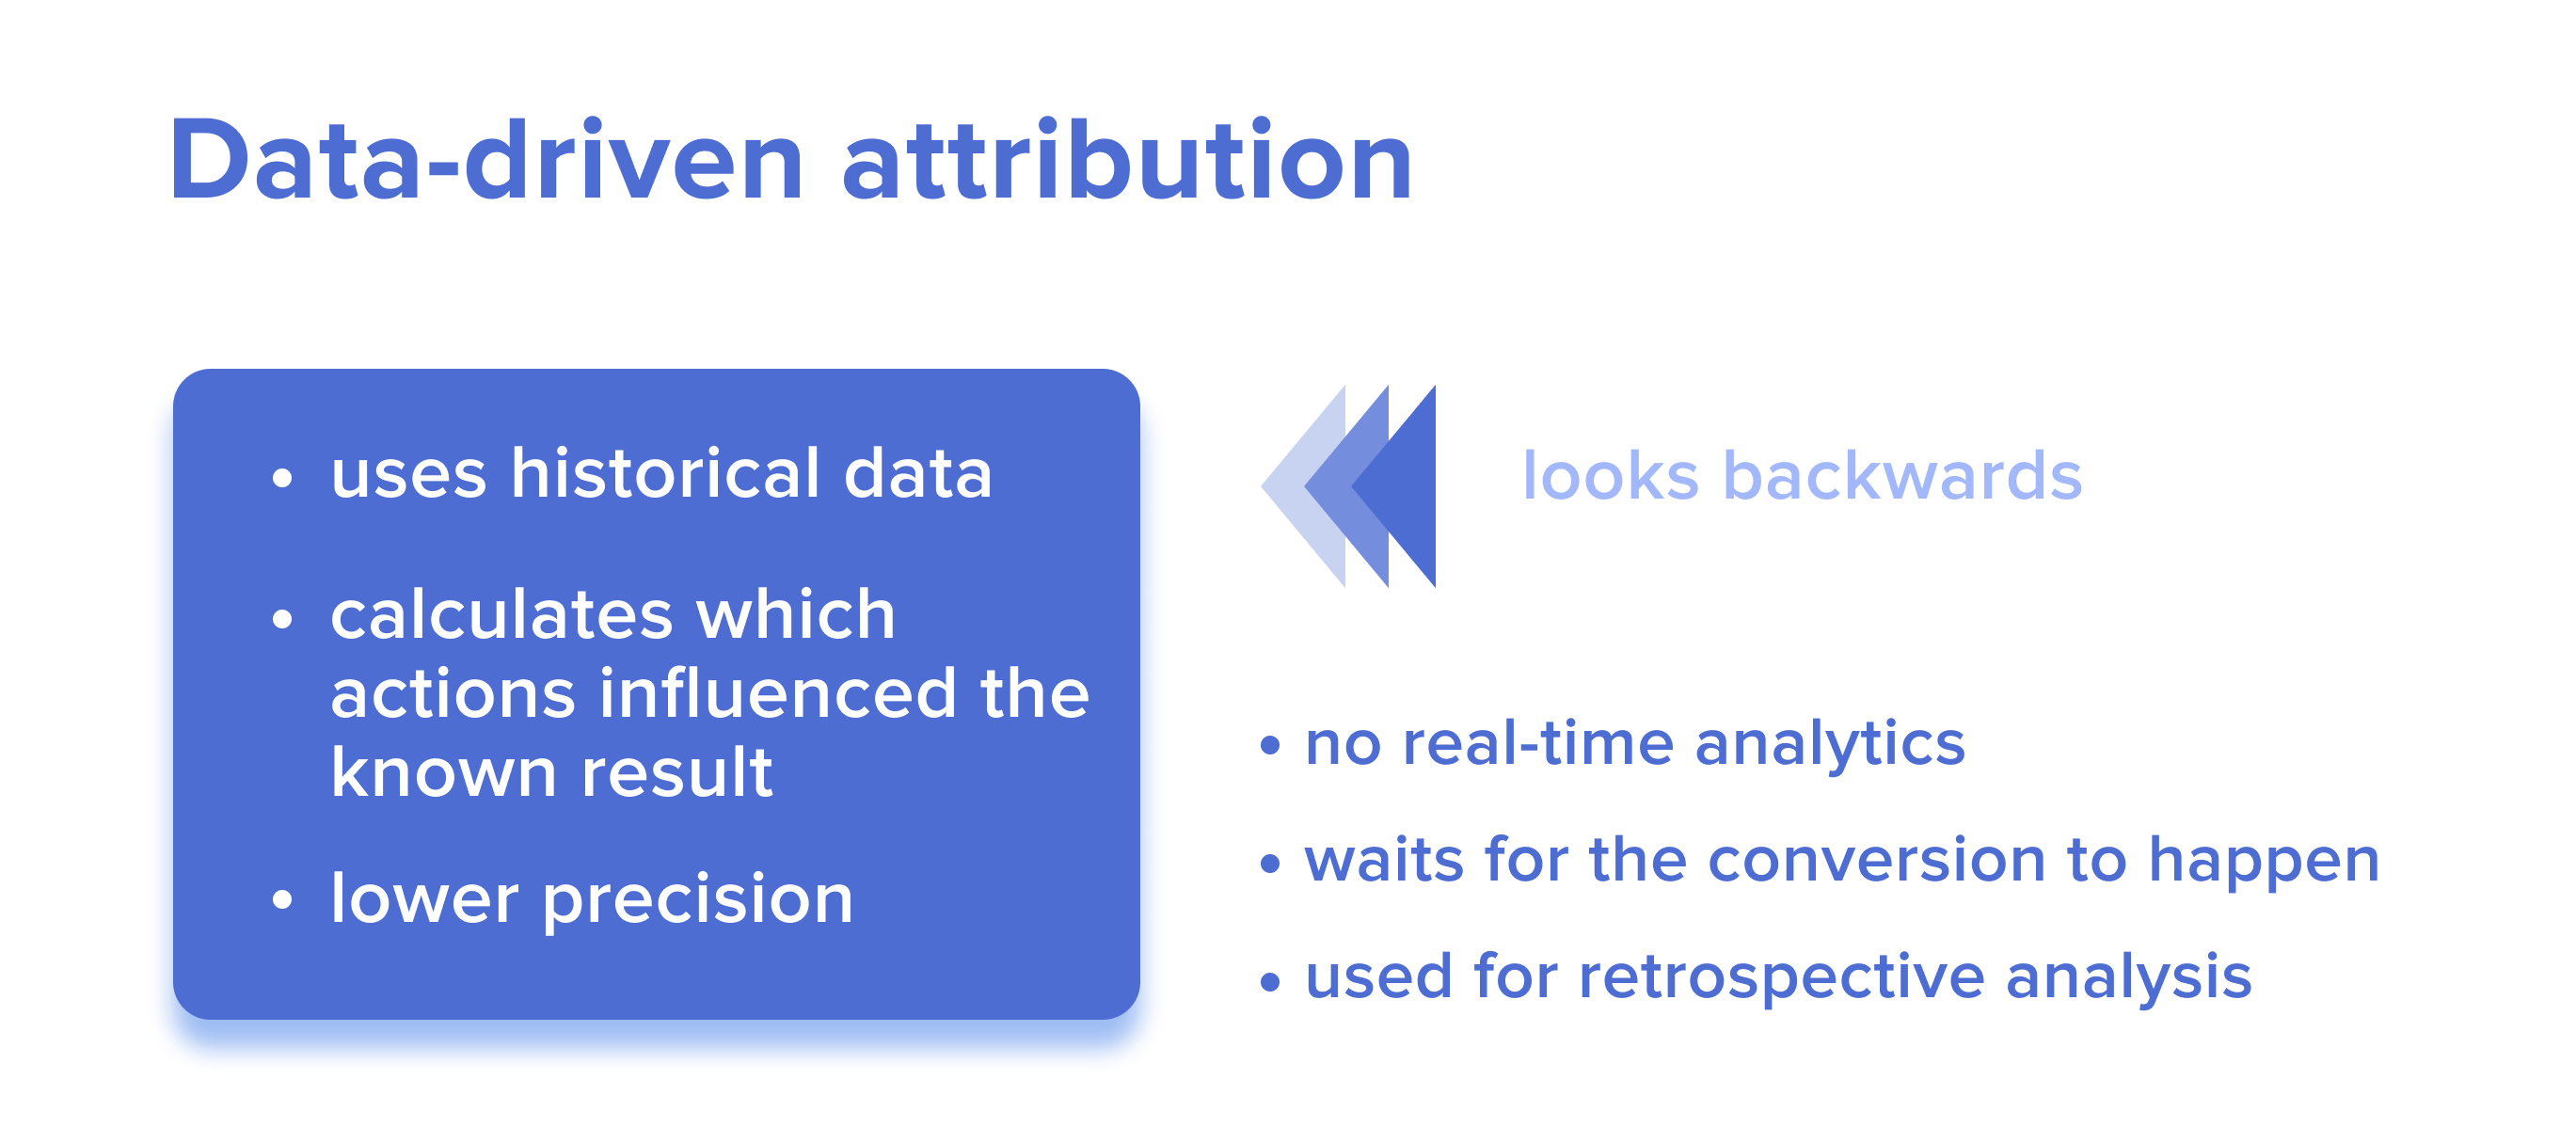 Data-driven attribution